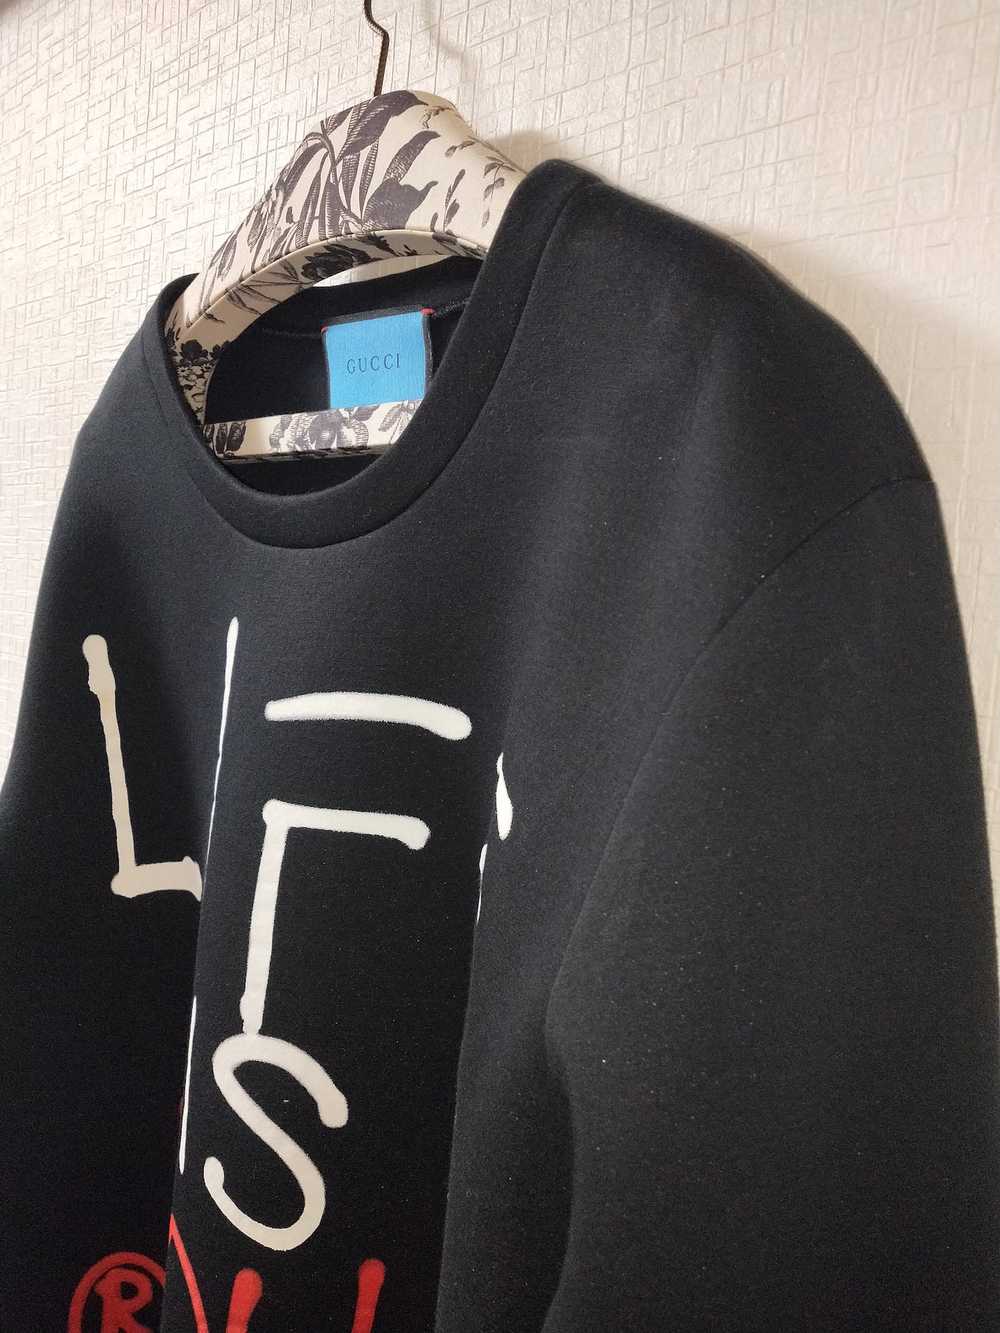 Gucci 'Life is Gucci' Neoprene Sweatshirt - image 3